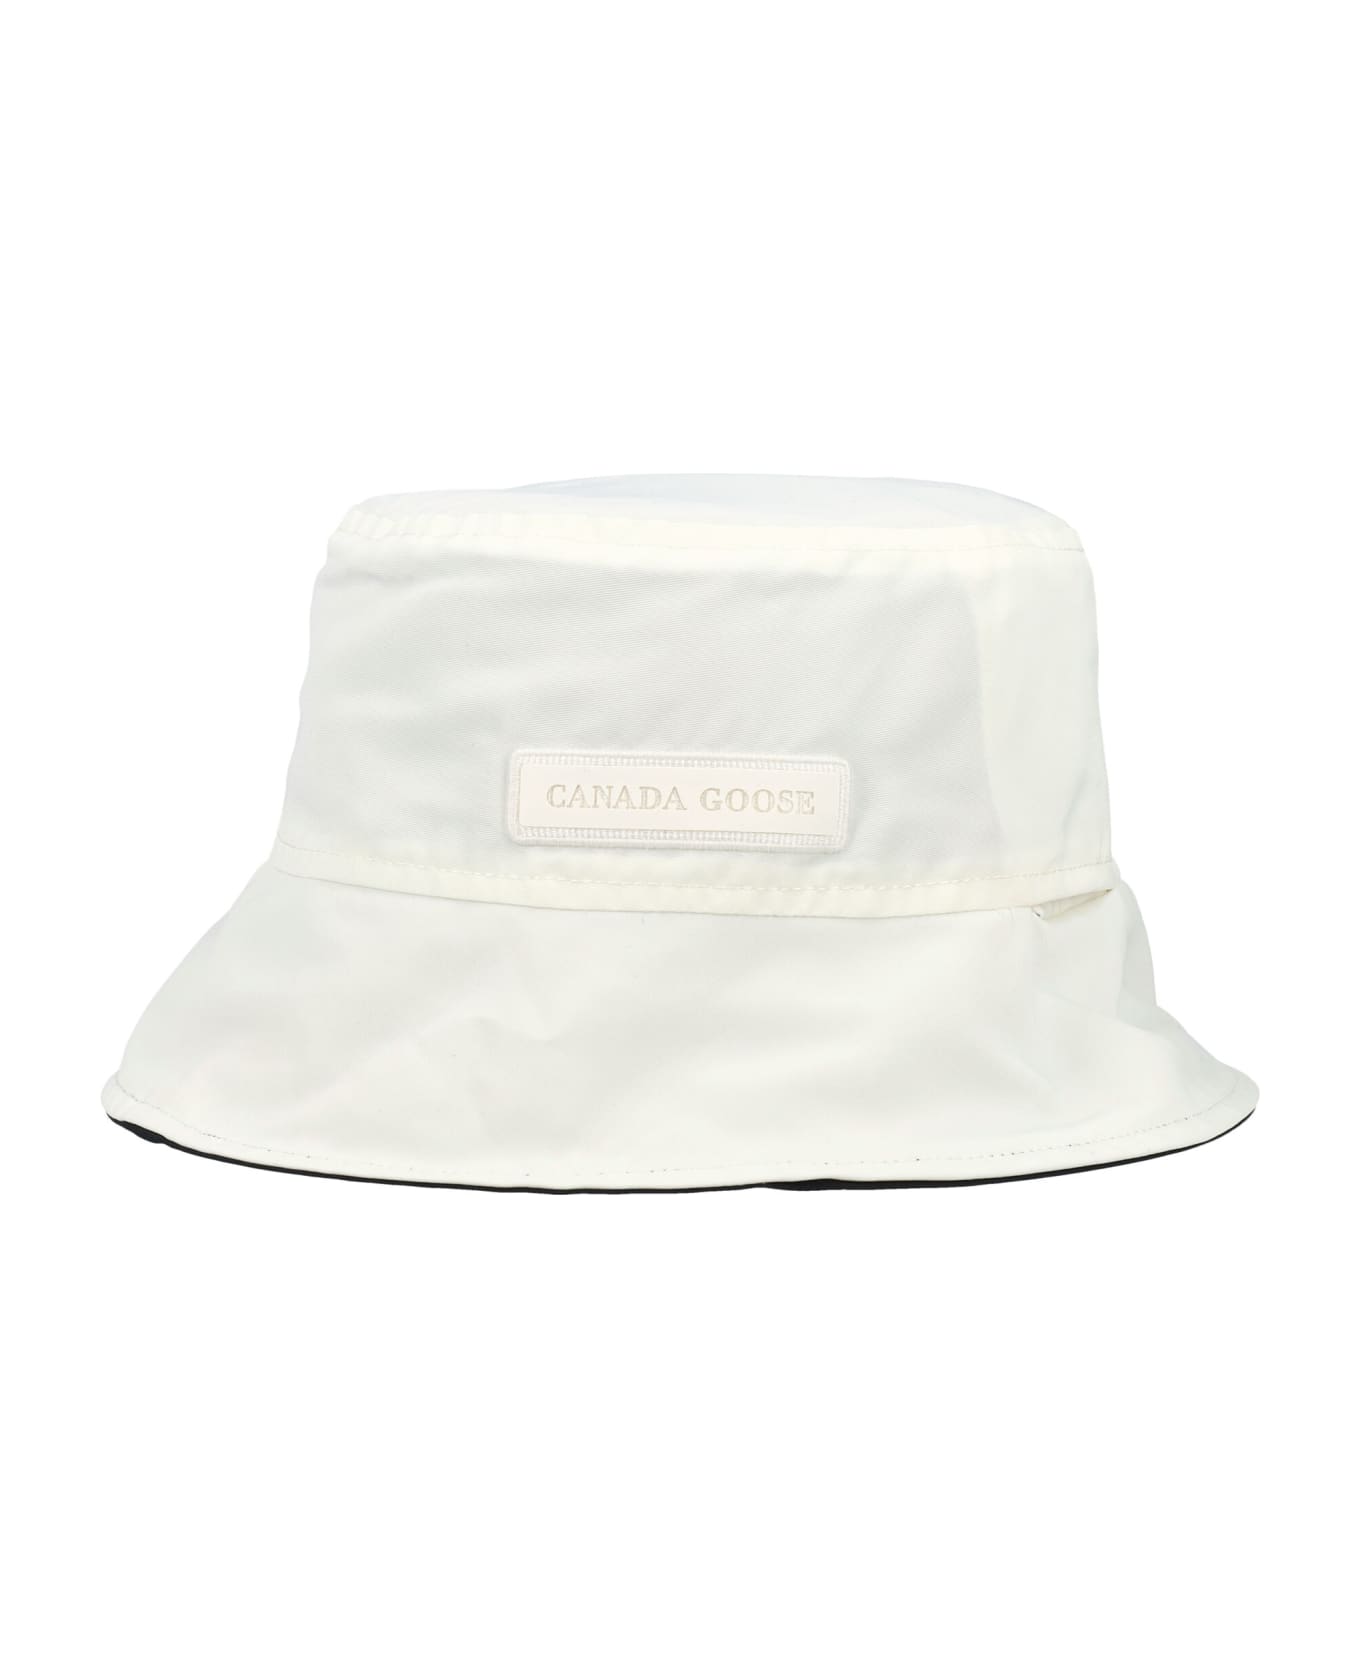 Canada Goose Cg Horizon Reversible Bucket Hat - Black/Northstar White